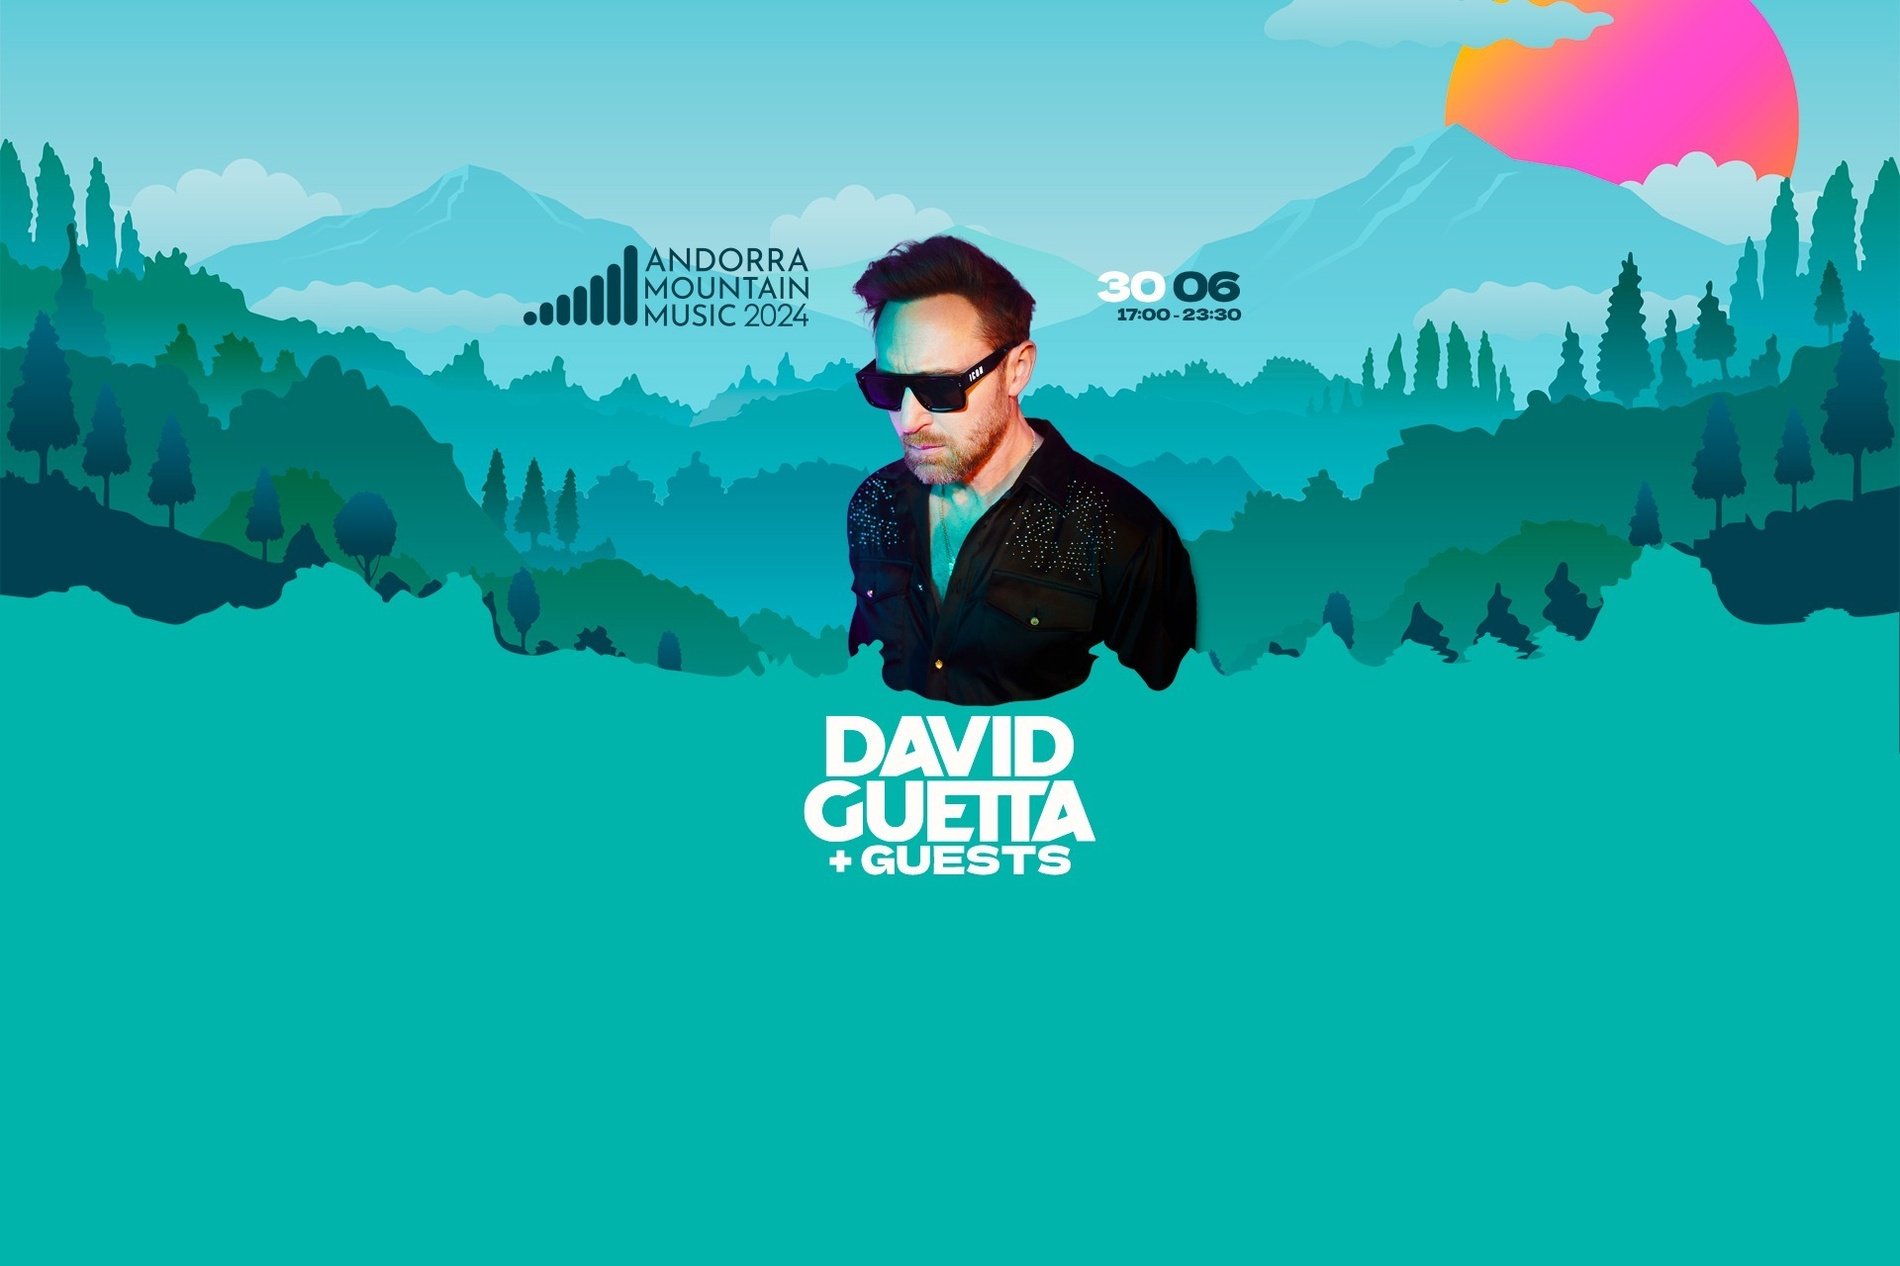 une affiche pour andorra mountain music 2024 avec david guetta